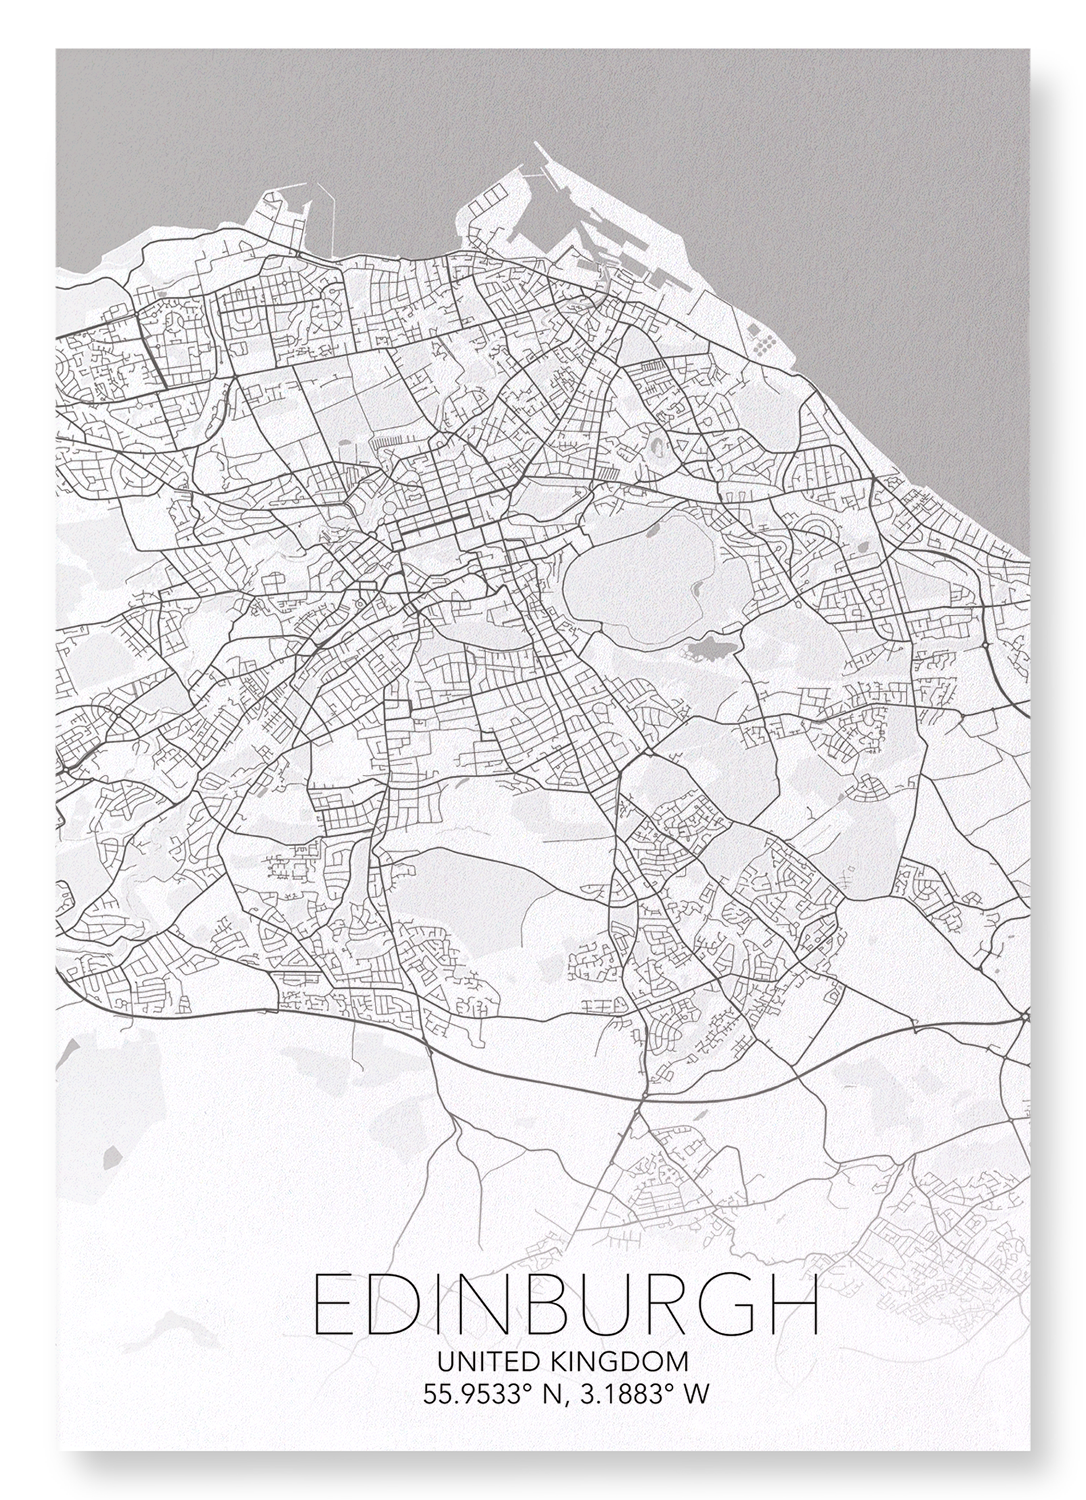 EDINBURGH FULL MAP